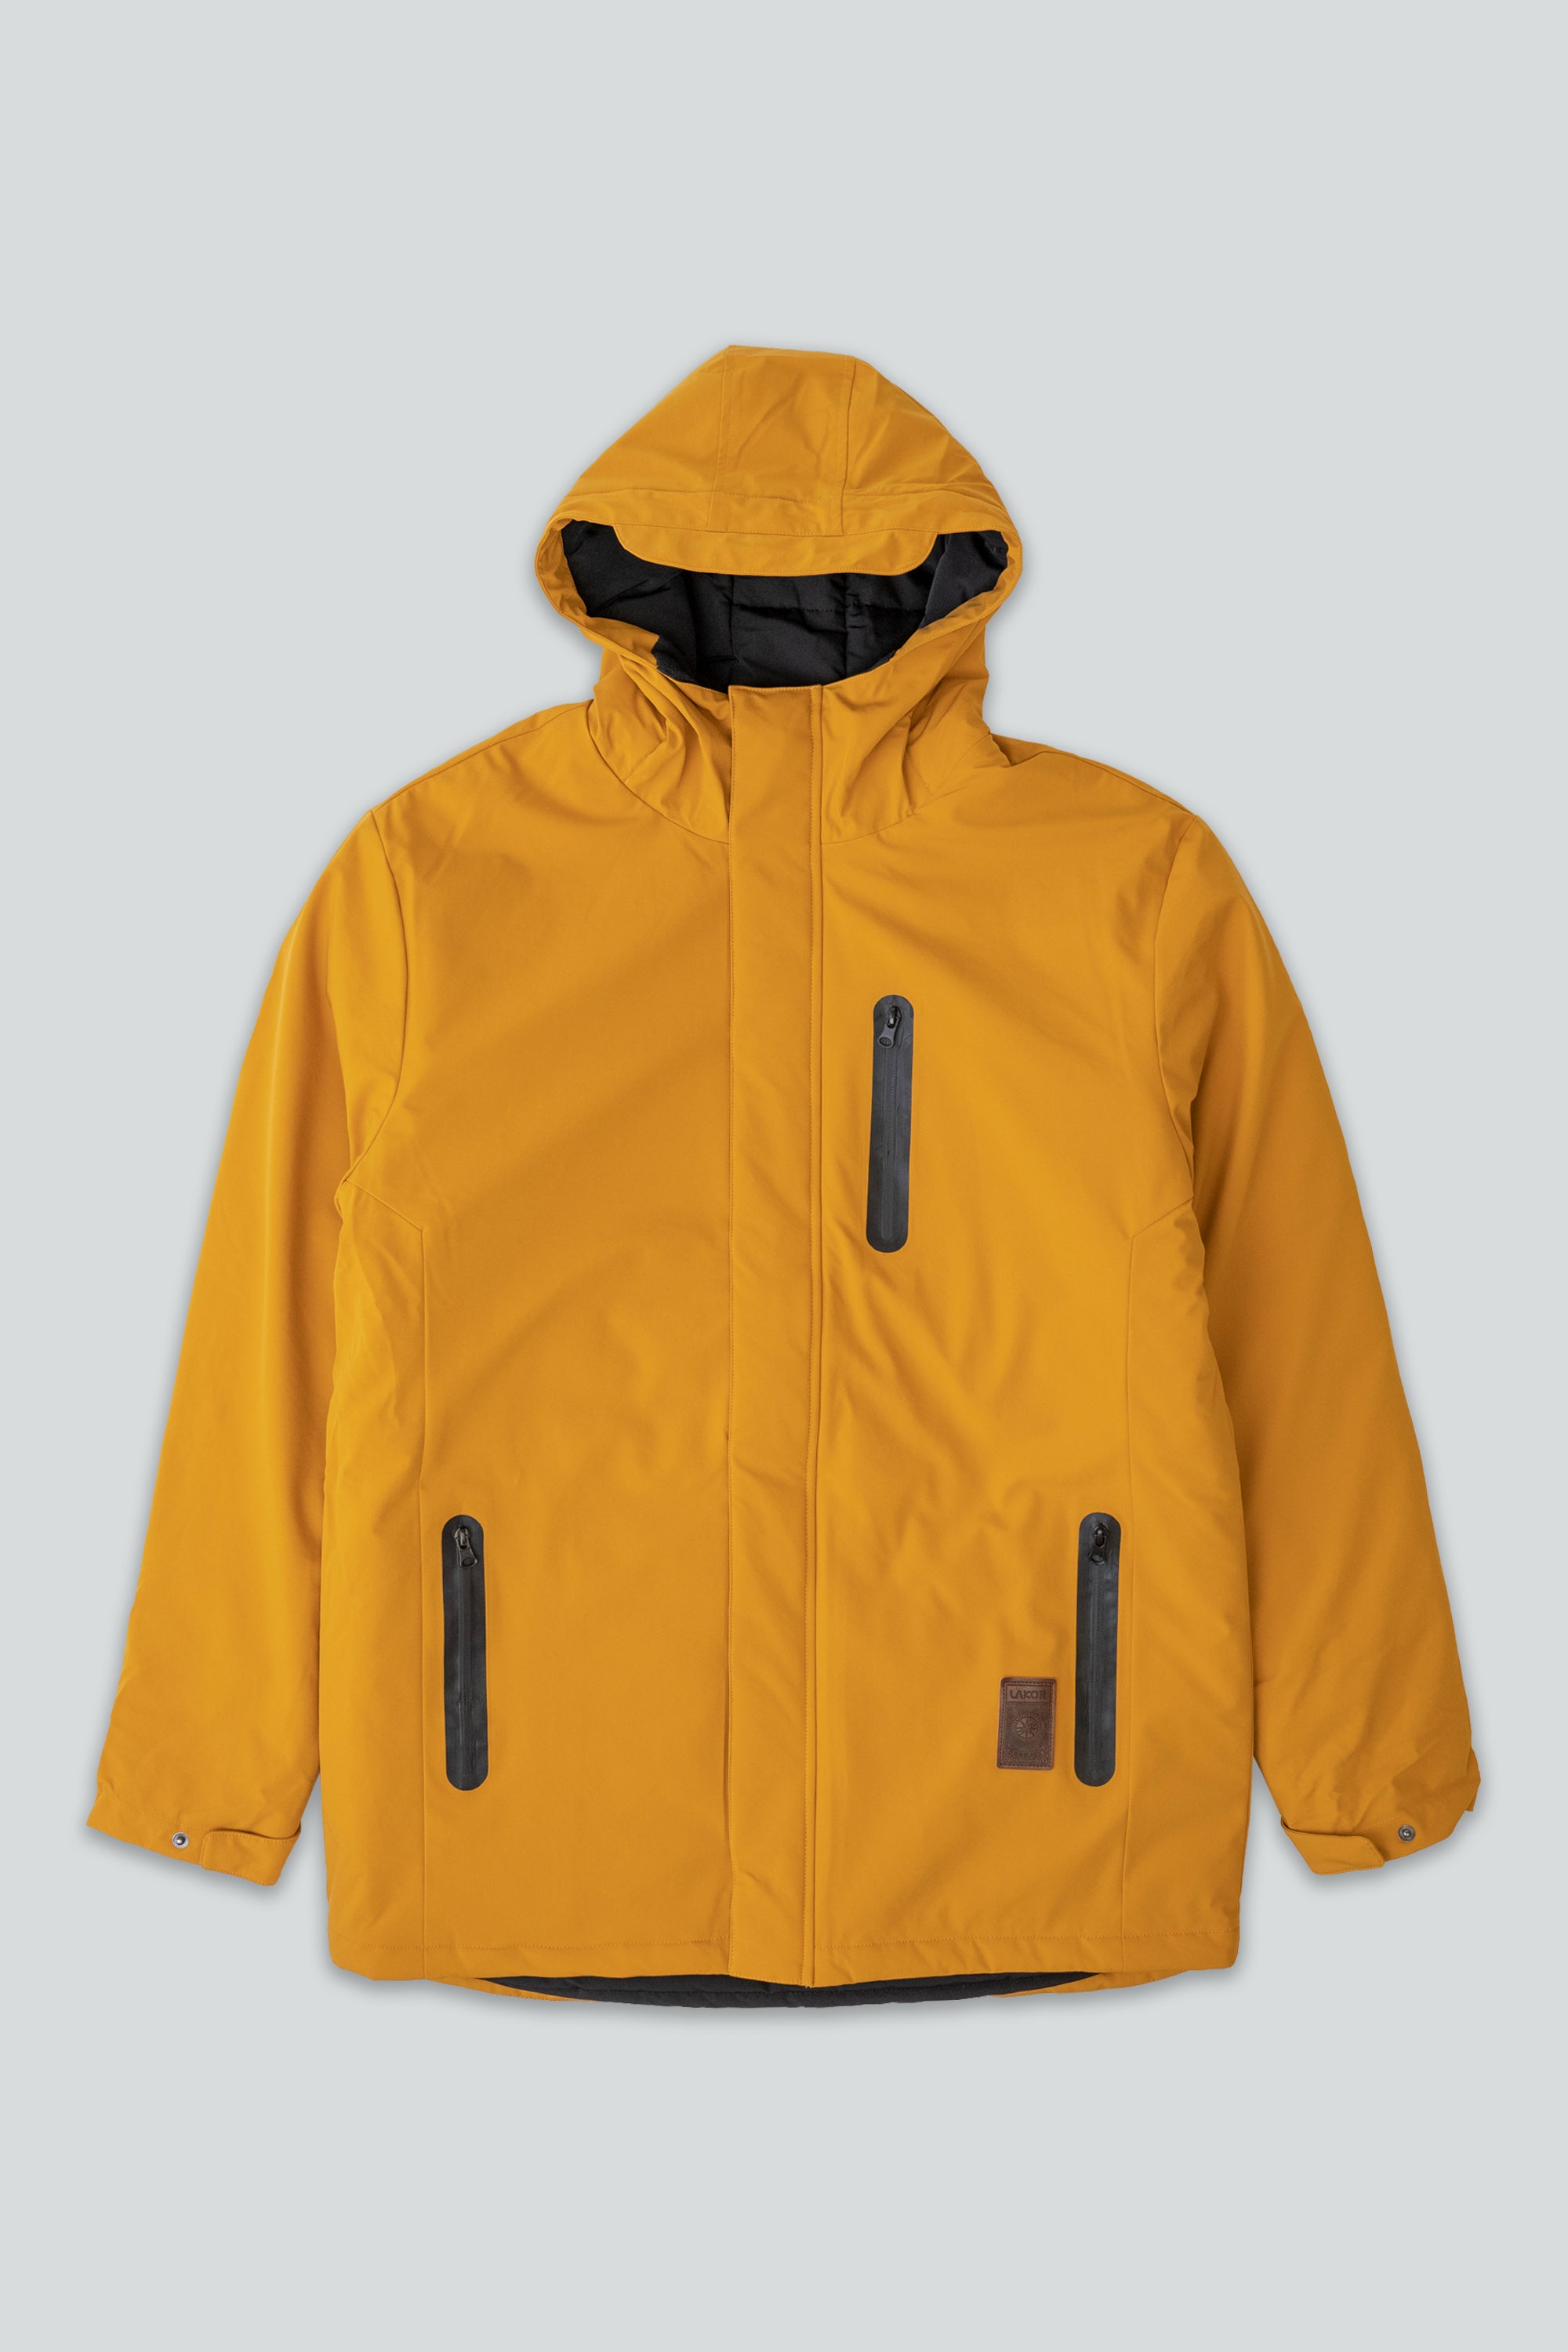 Arctic Jacket 2.0 (Mustard)